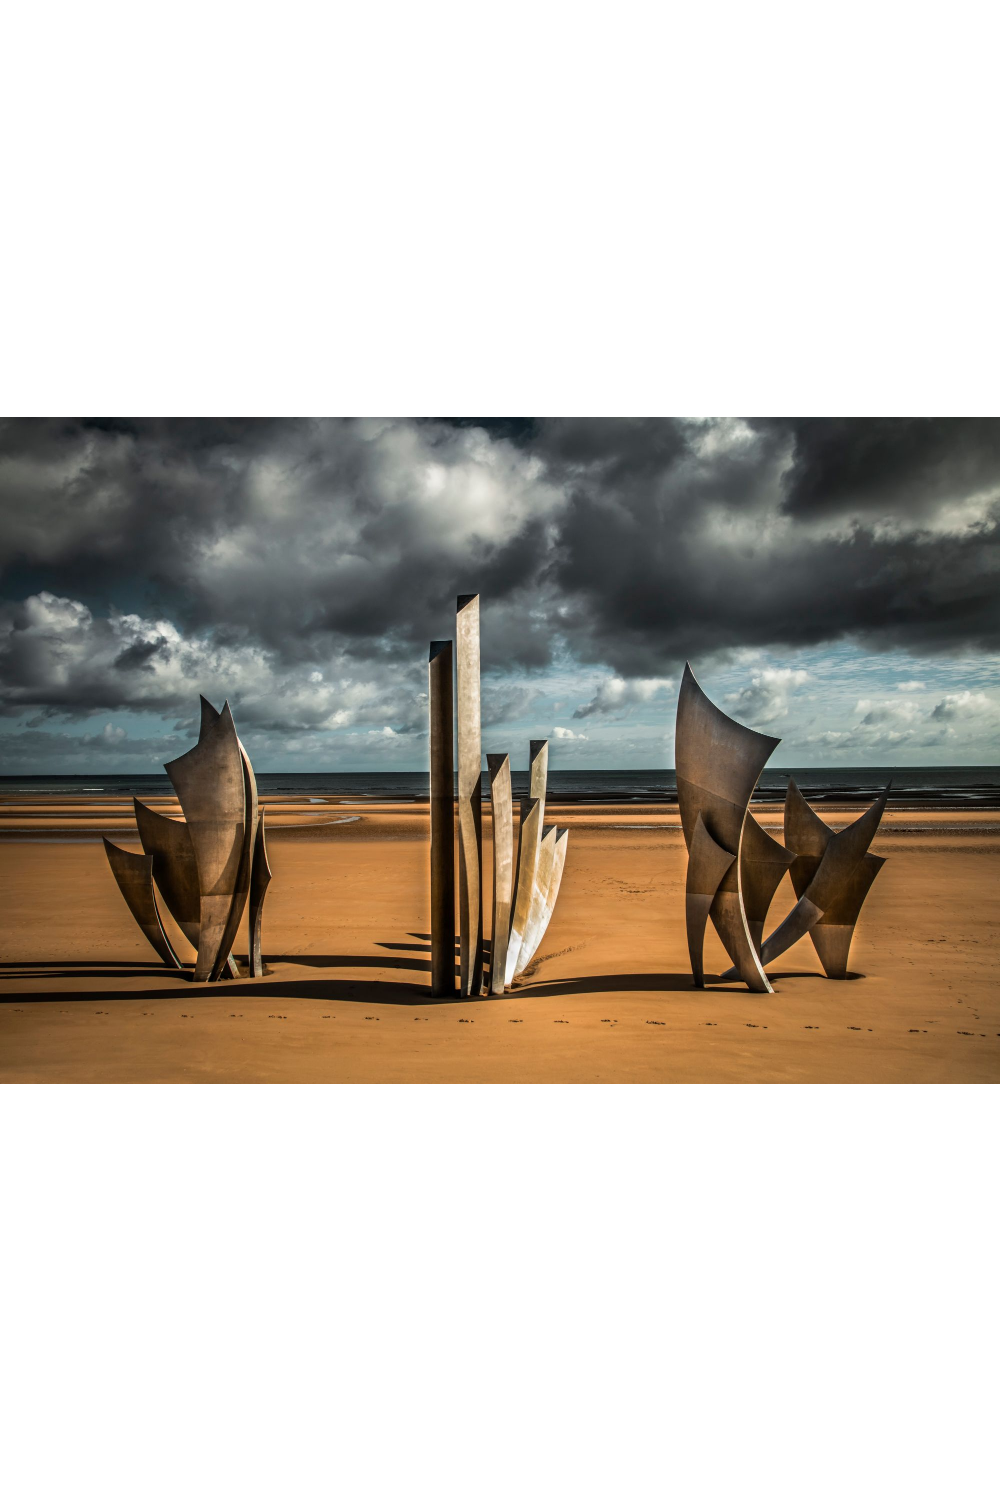 Blade Sculptures Photographic Art | Andrew Martin Sword Beach | Oroa.com